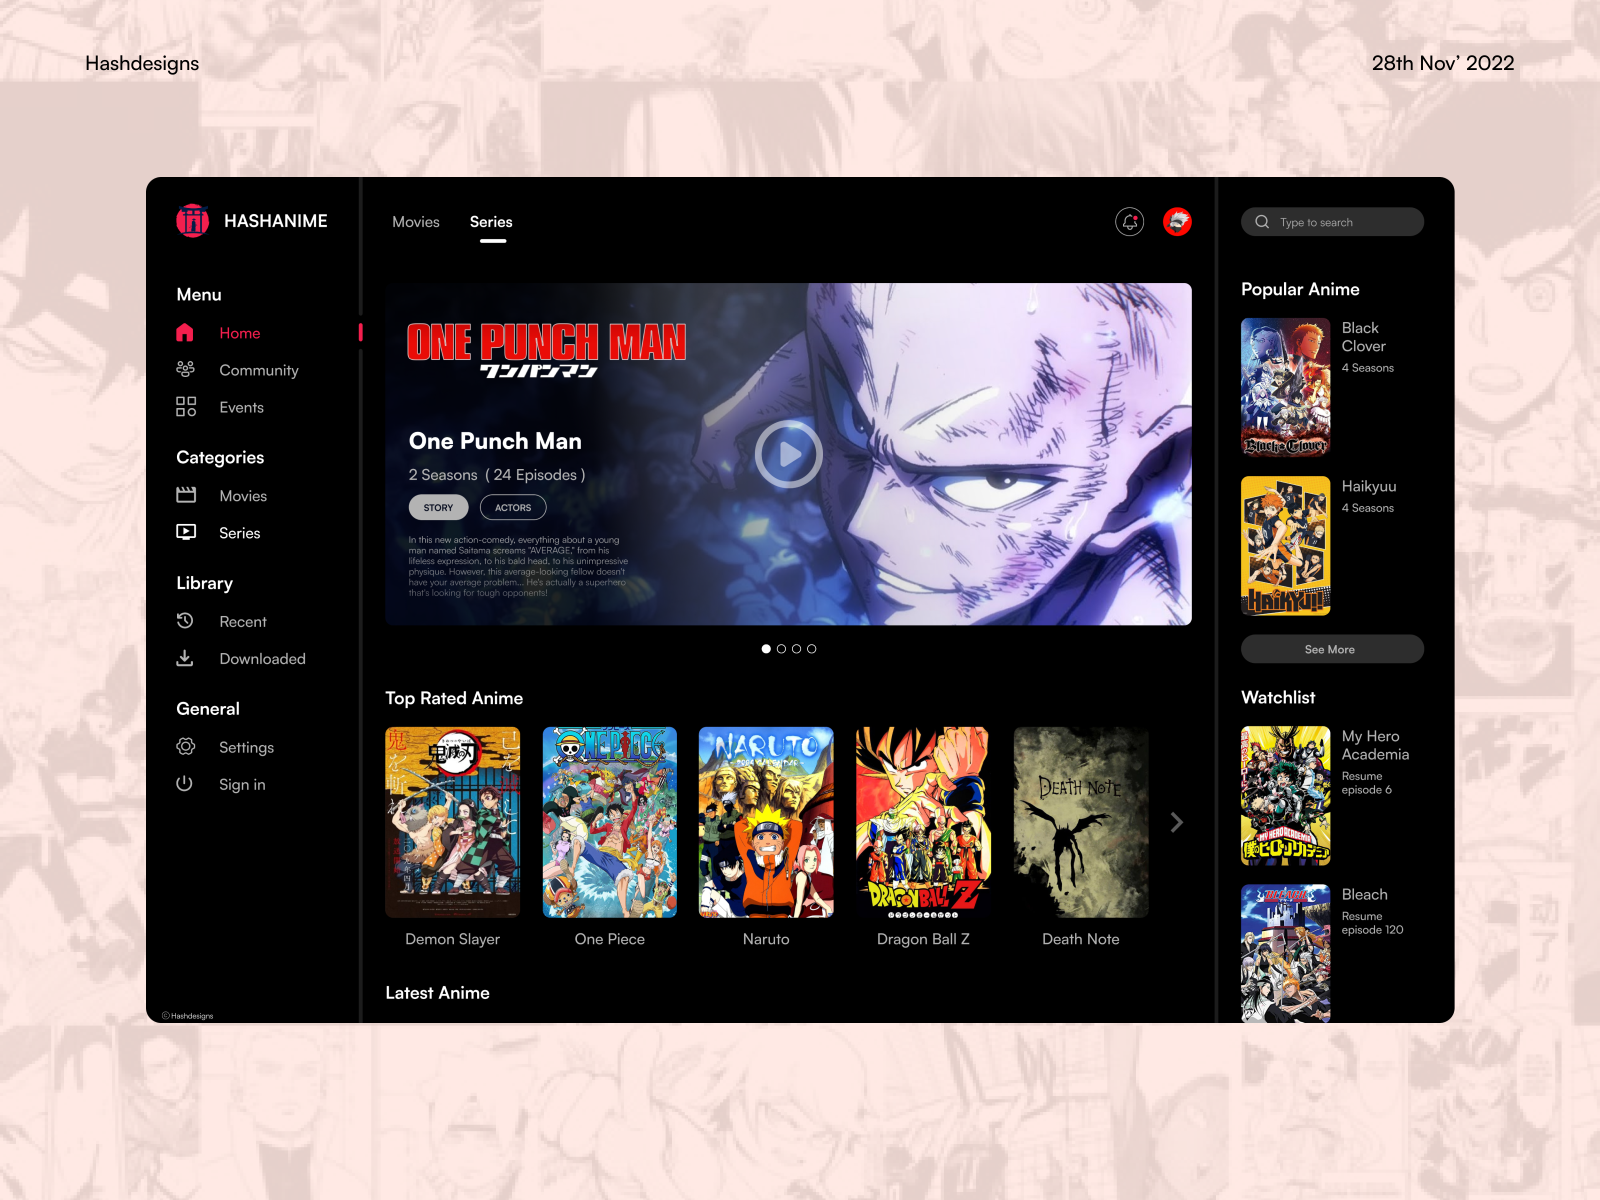 MangaXD.ws : Animes en Streaming et DDL 100% gratuit | Pearltrees